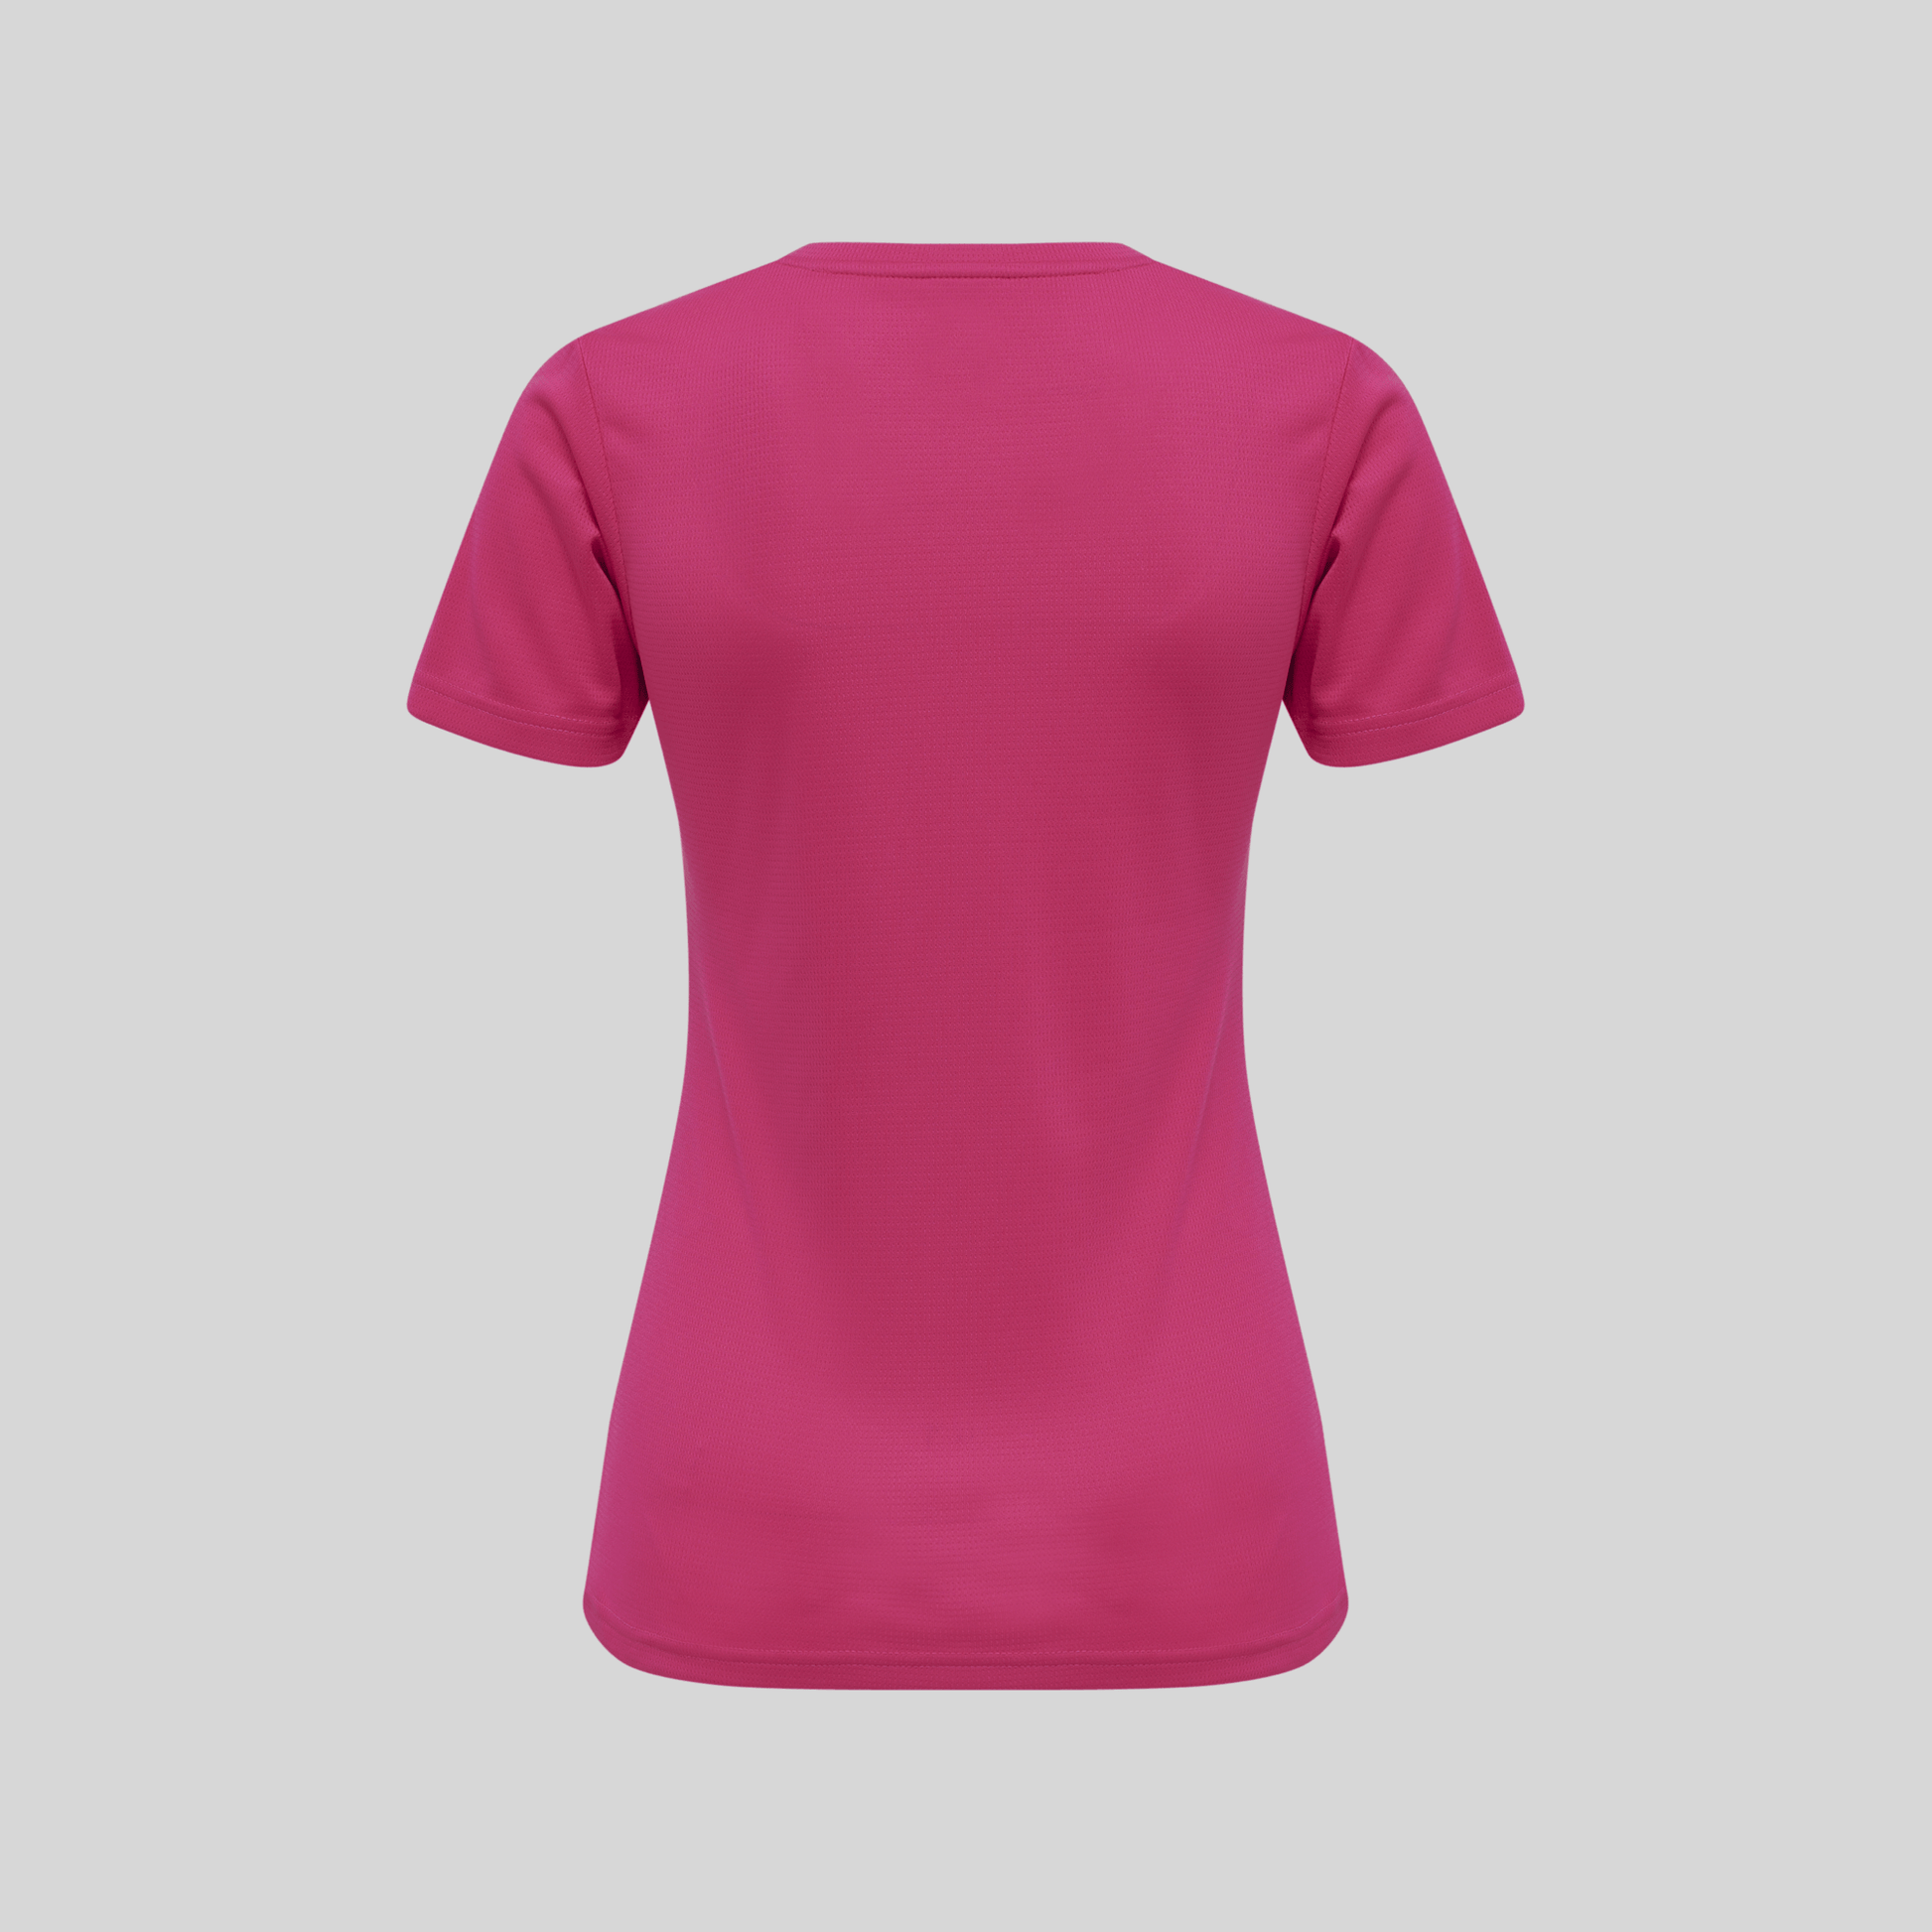 Vigor Tshirt Pink Women's - Sports Cartel